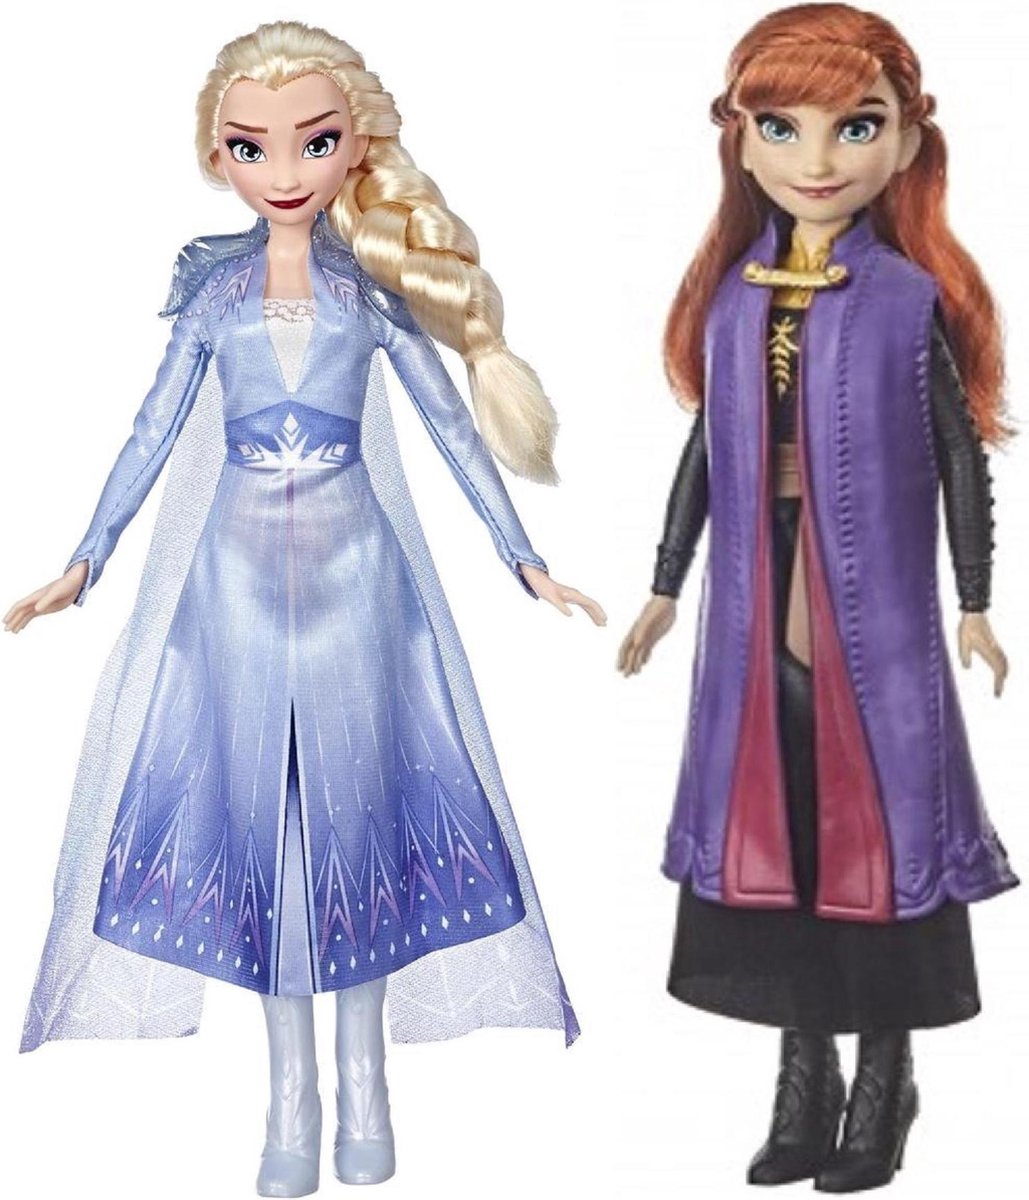 Disneys Frozen Singing Queen Iduna Lullaby Set With Elsa And Anna 2460